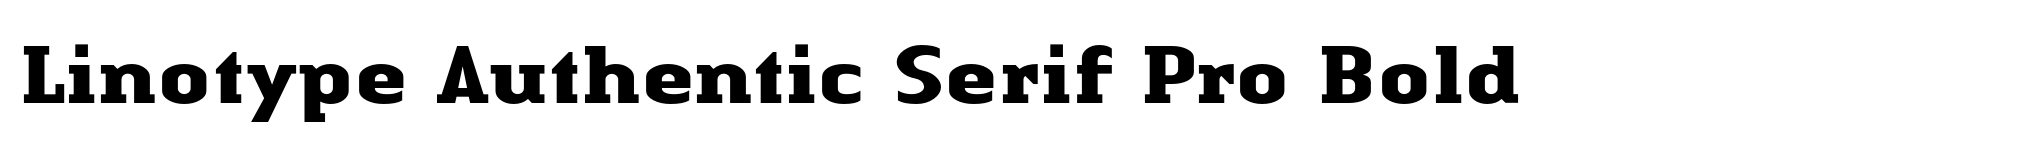 Linotype Authentic Serif Pro Bold image